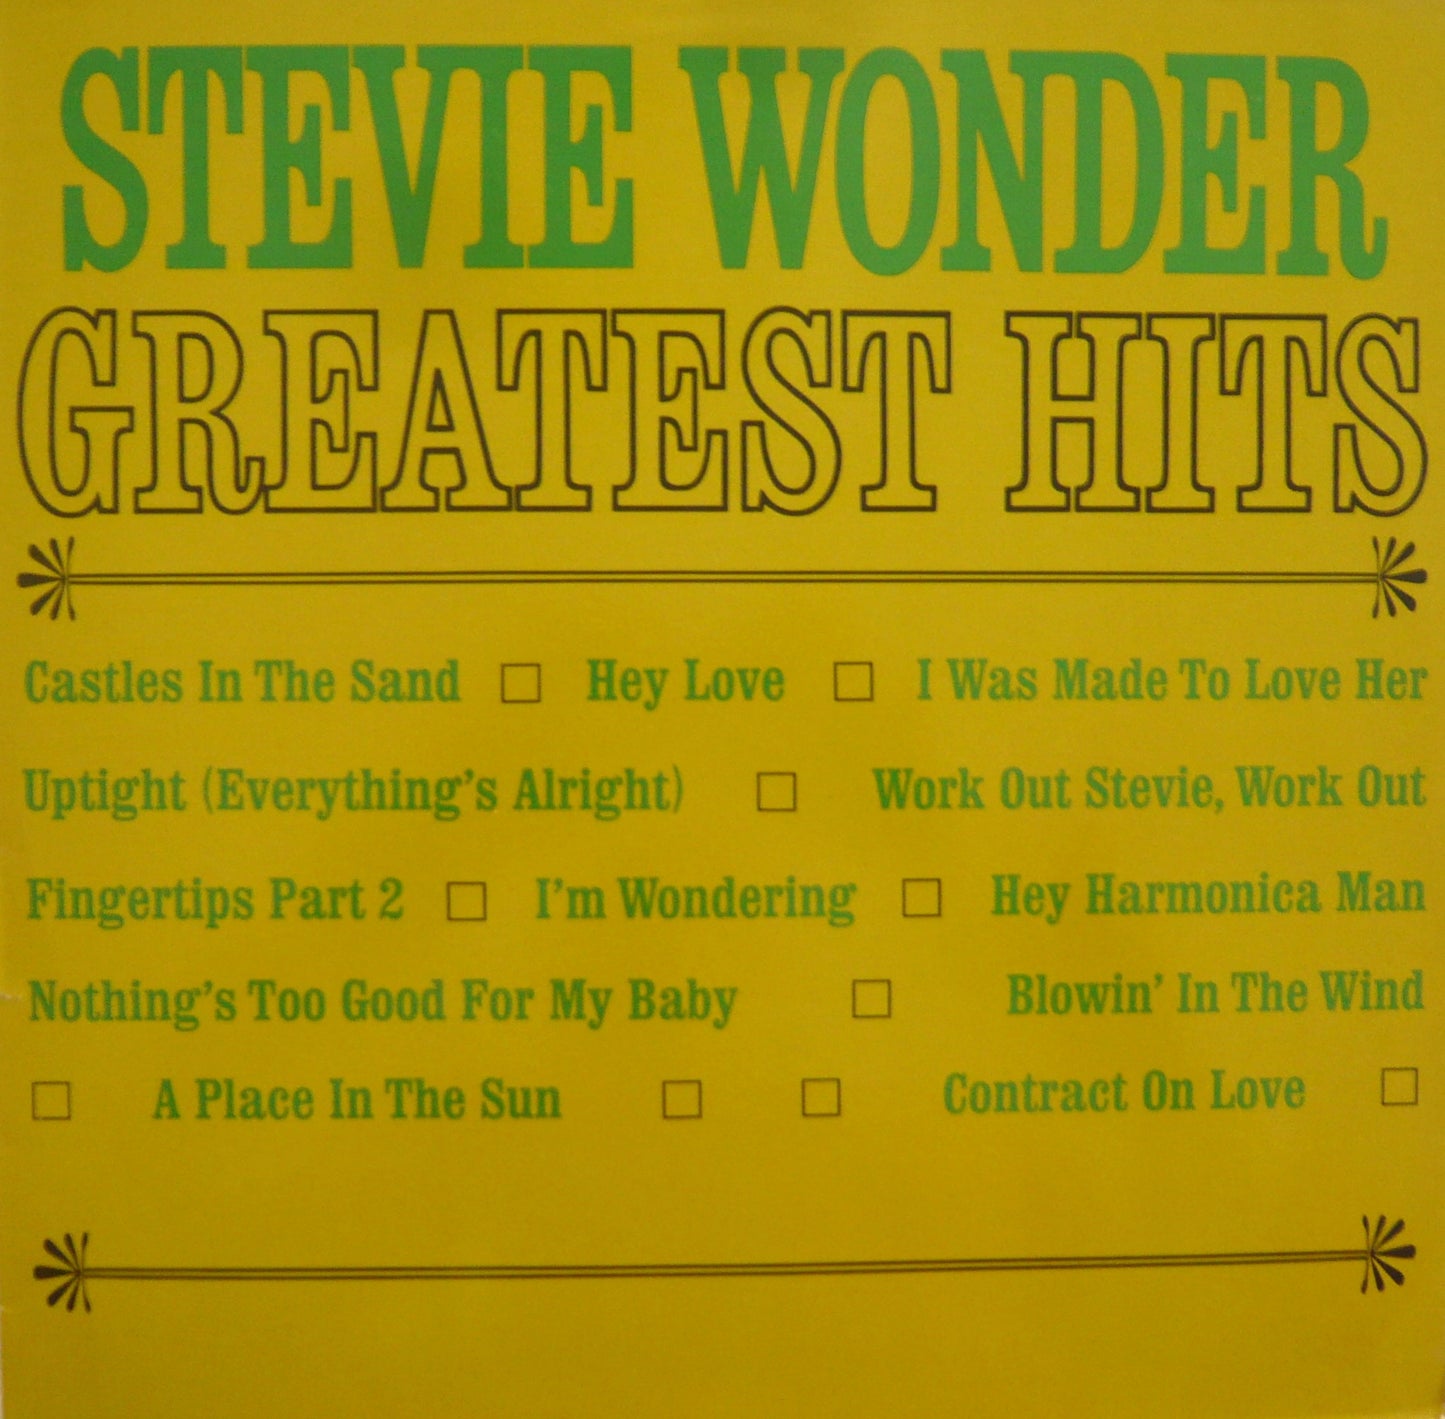 Wonder, Stevie - Greatest Hits